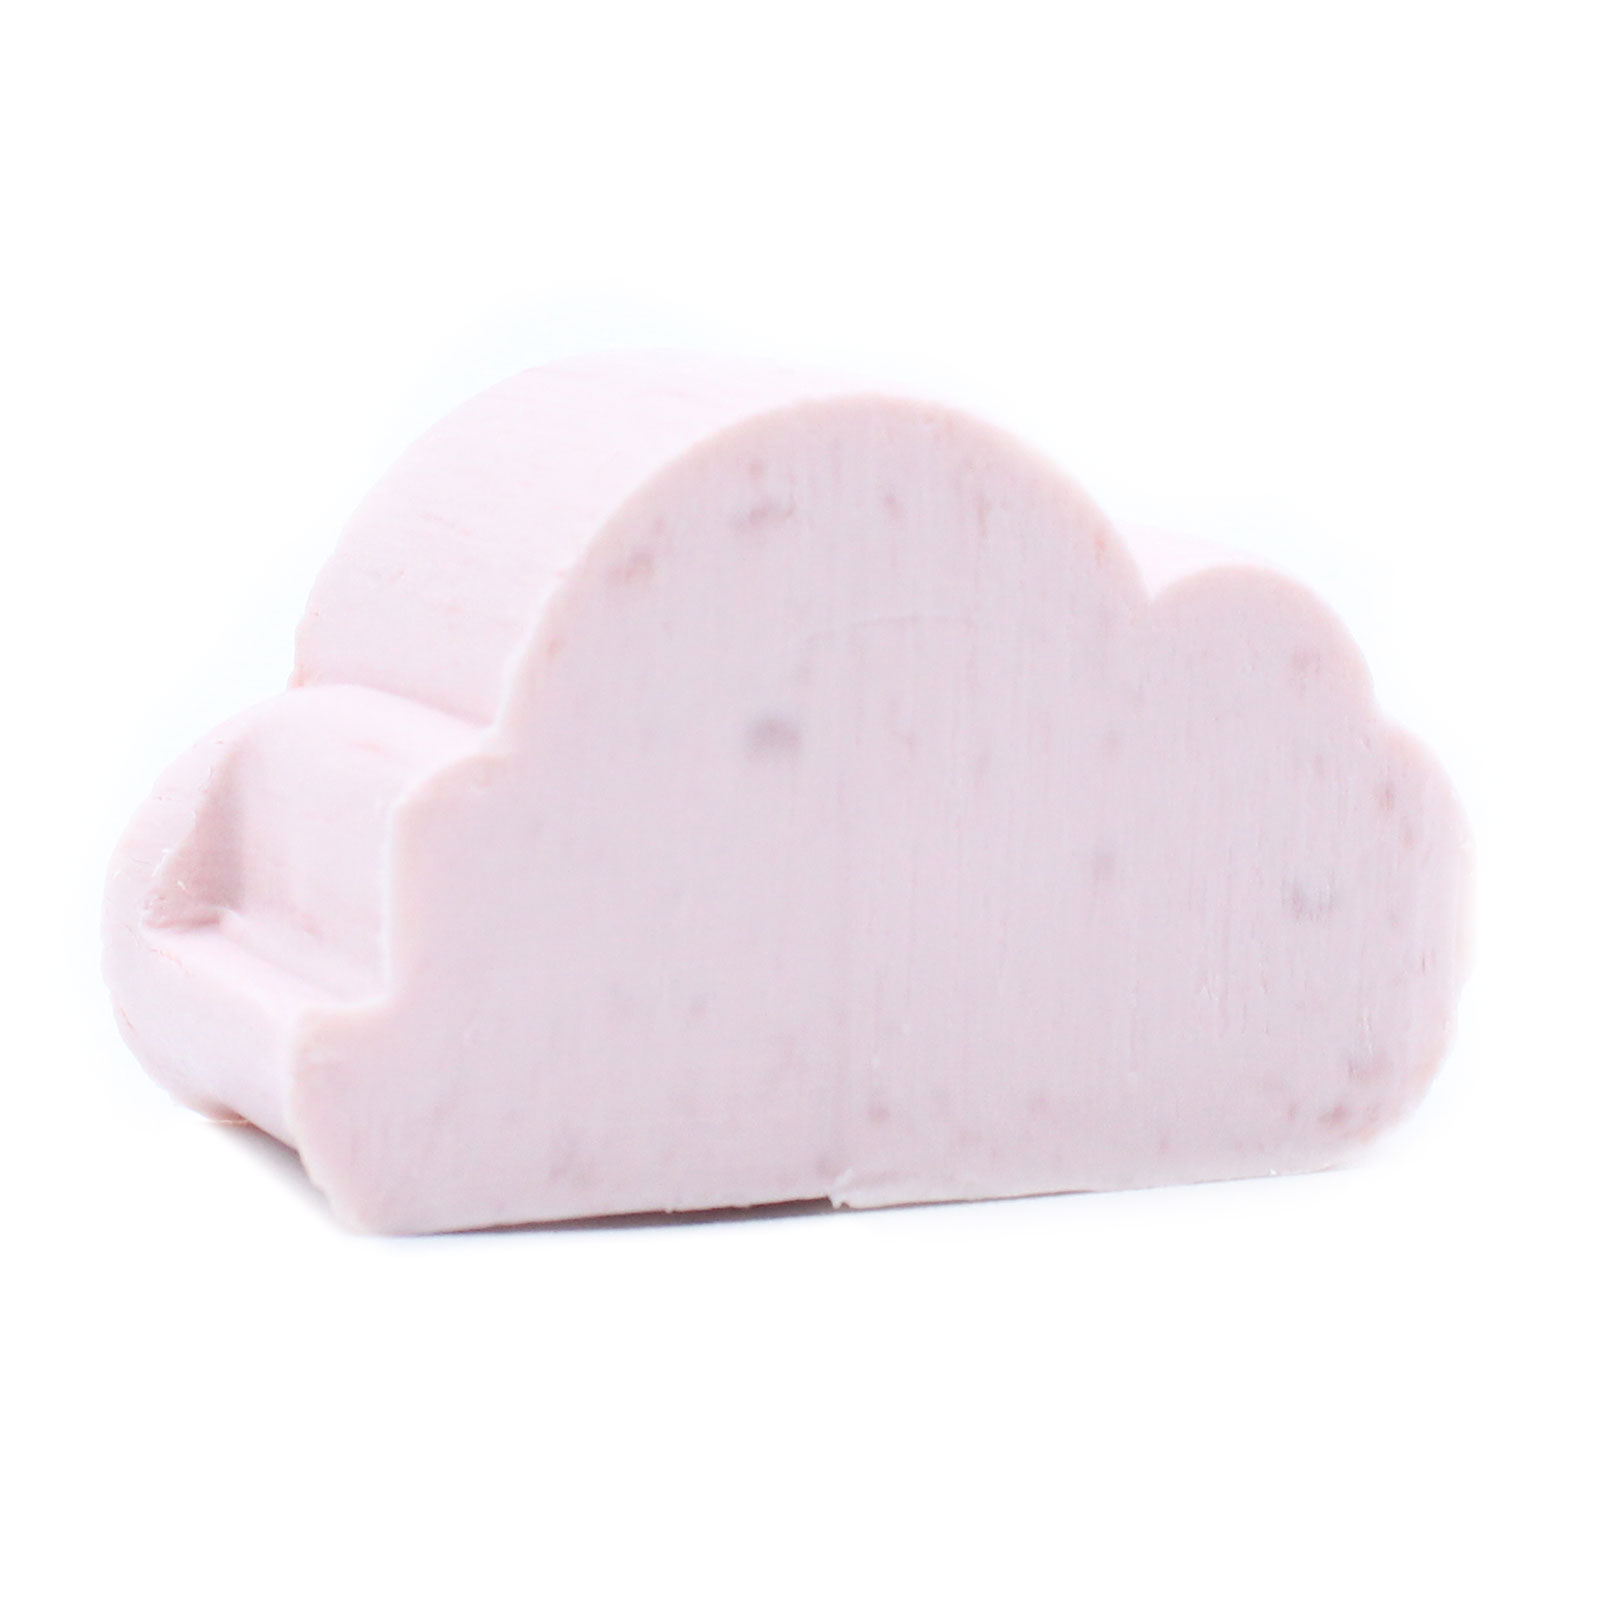 10 Cloud Guest Soaps - Marshmallow